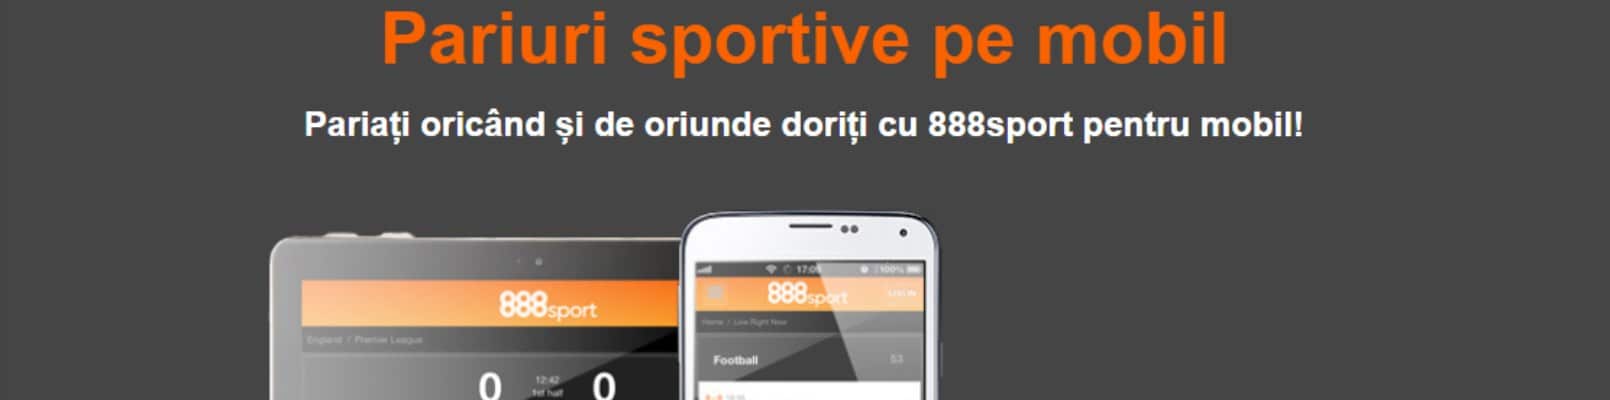 888 sport mobil